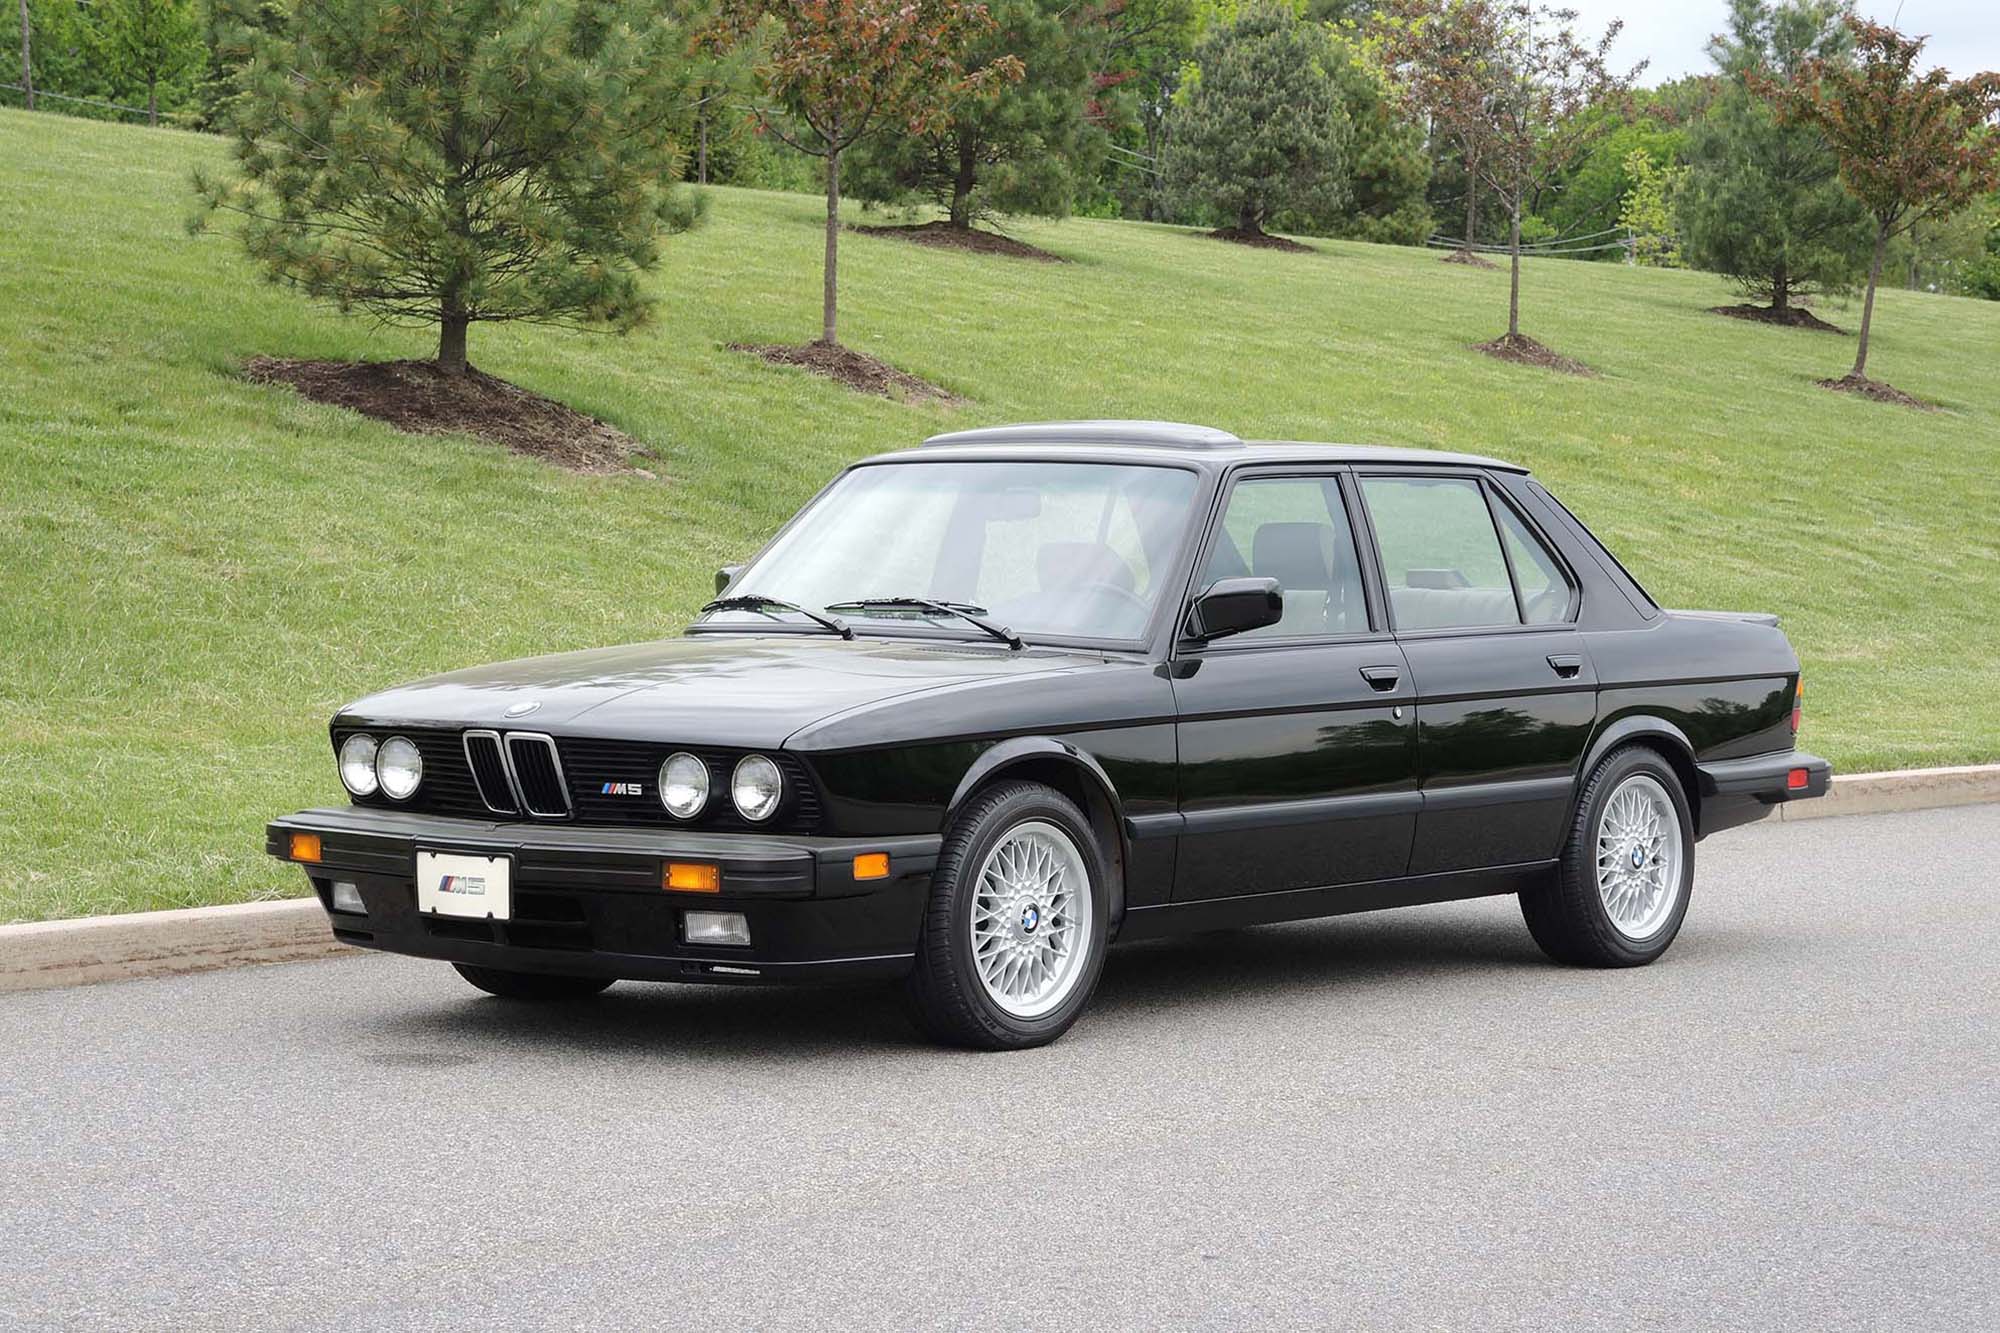 A black 1988 BMW M5